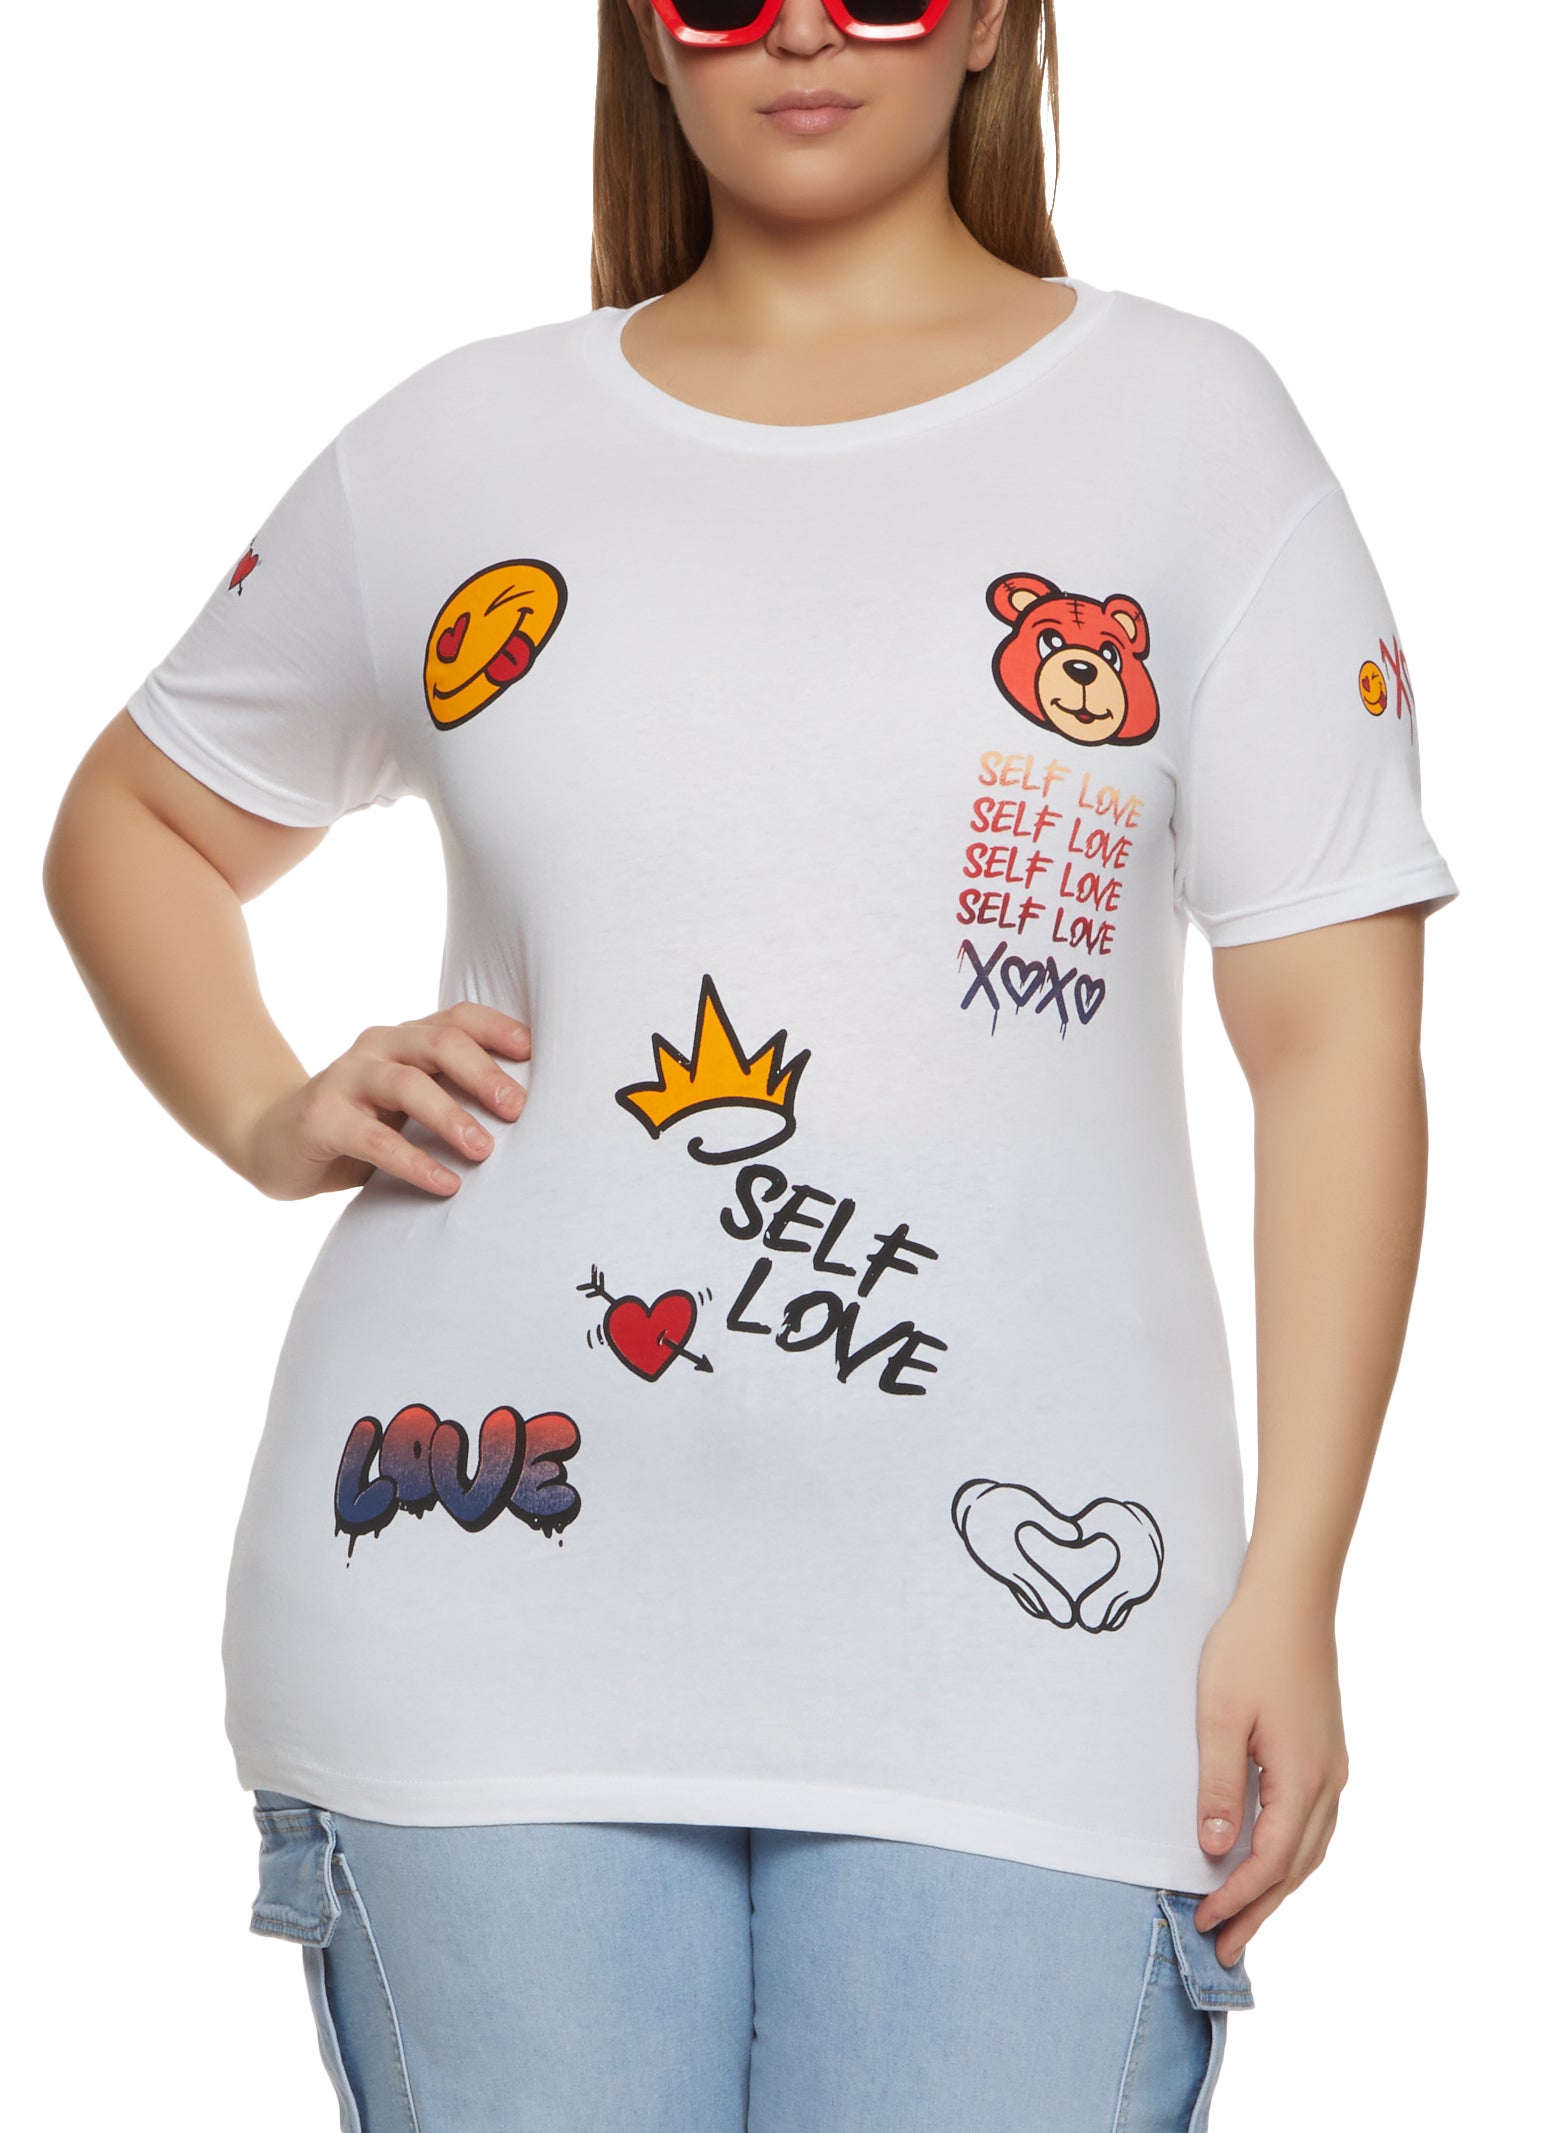 Womens Plus Size Self Love Graphic Crew Neck T Shirt, White, Size 1X